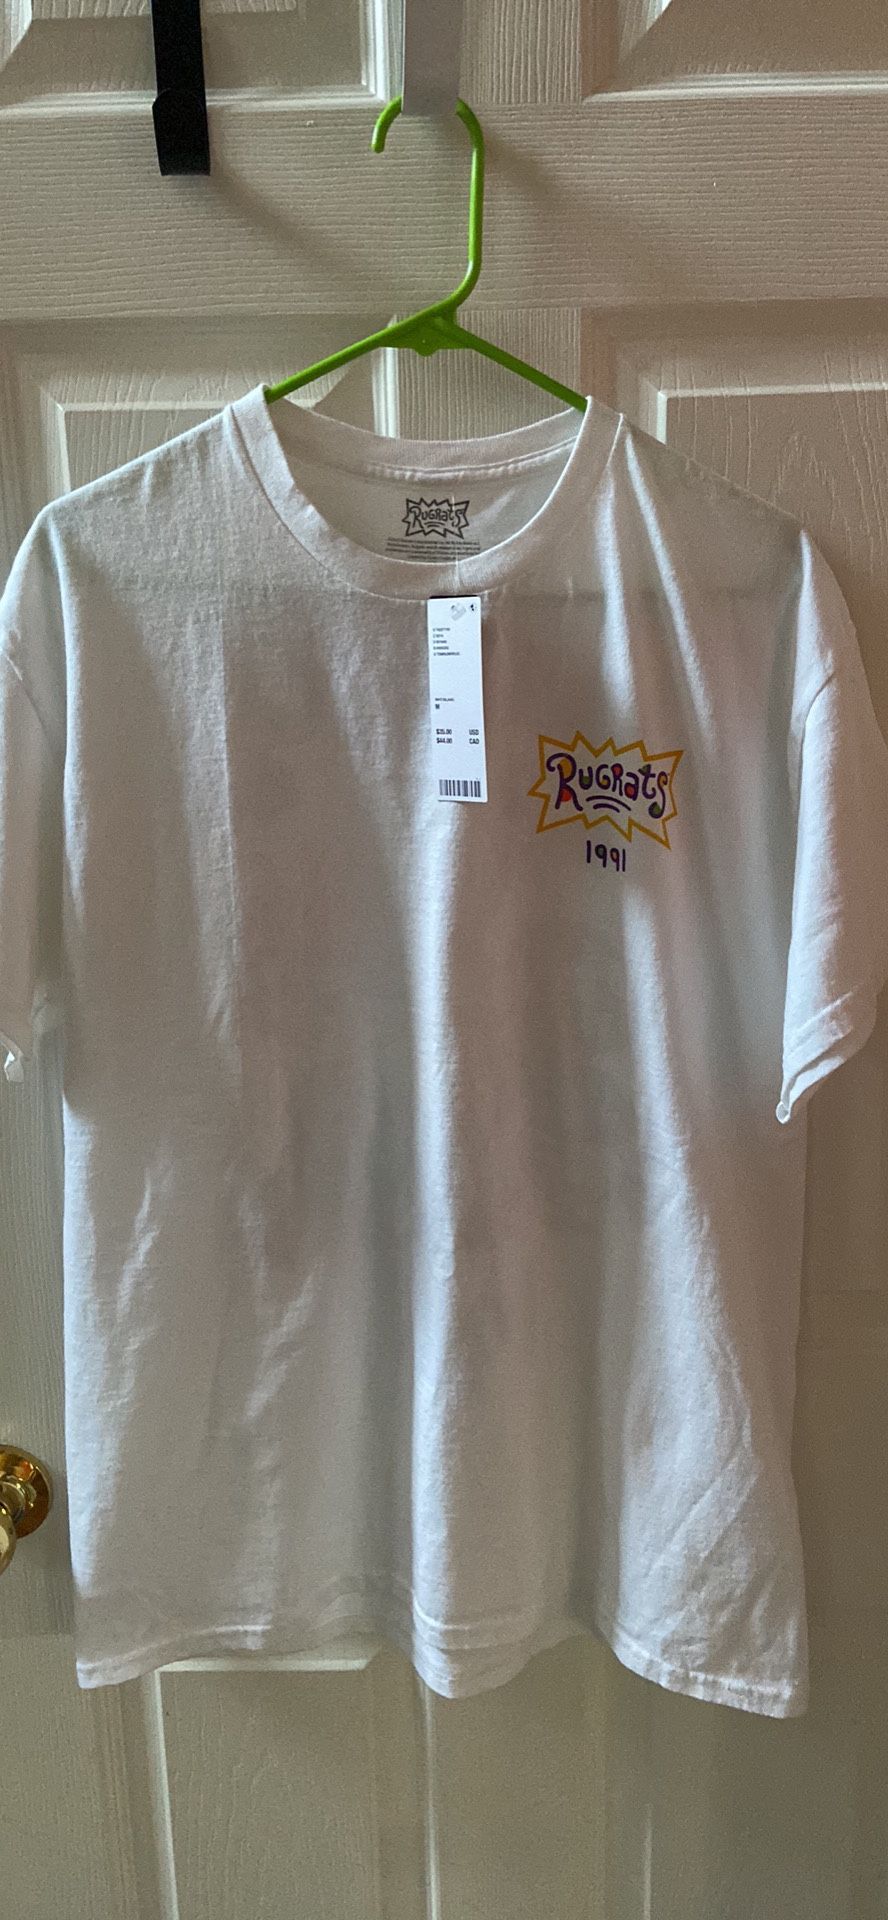 New Rugrats 1991 T-shirt Size M